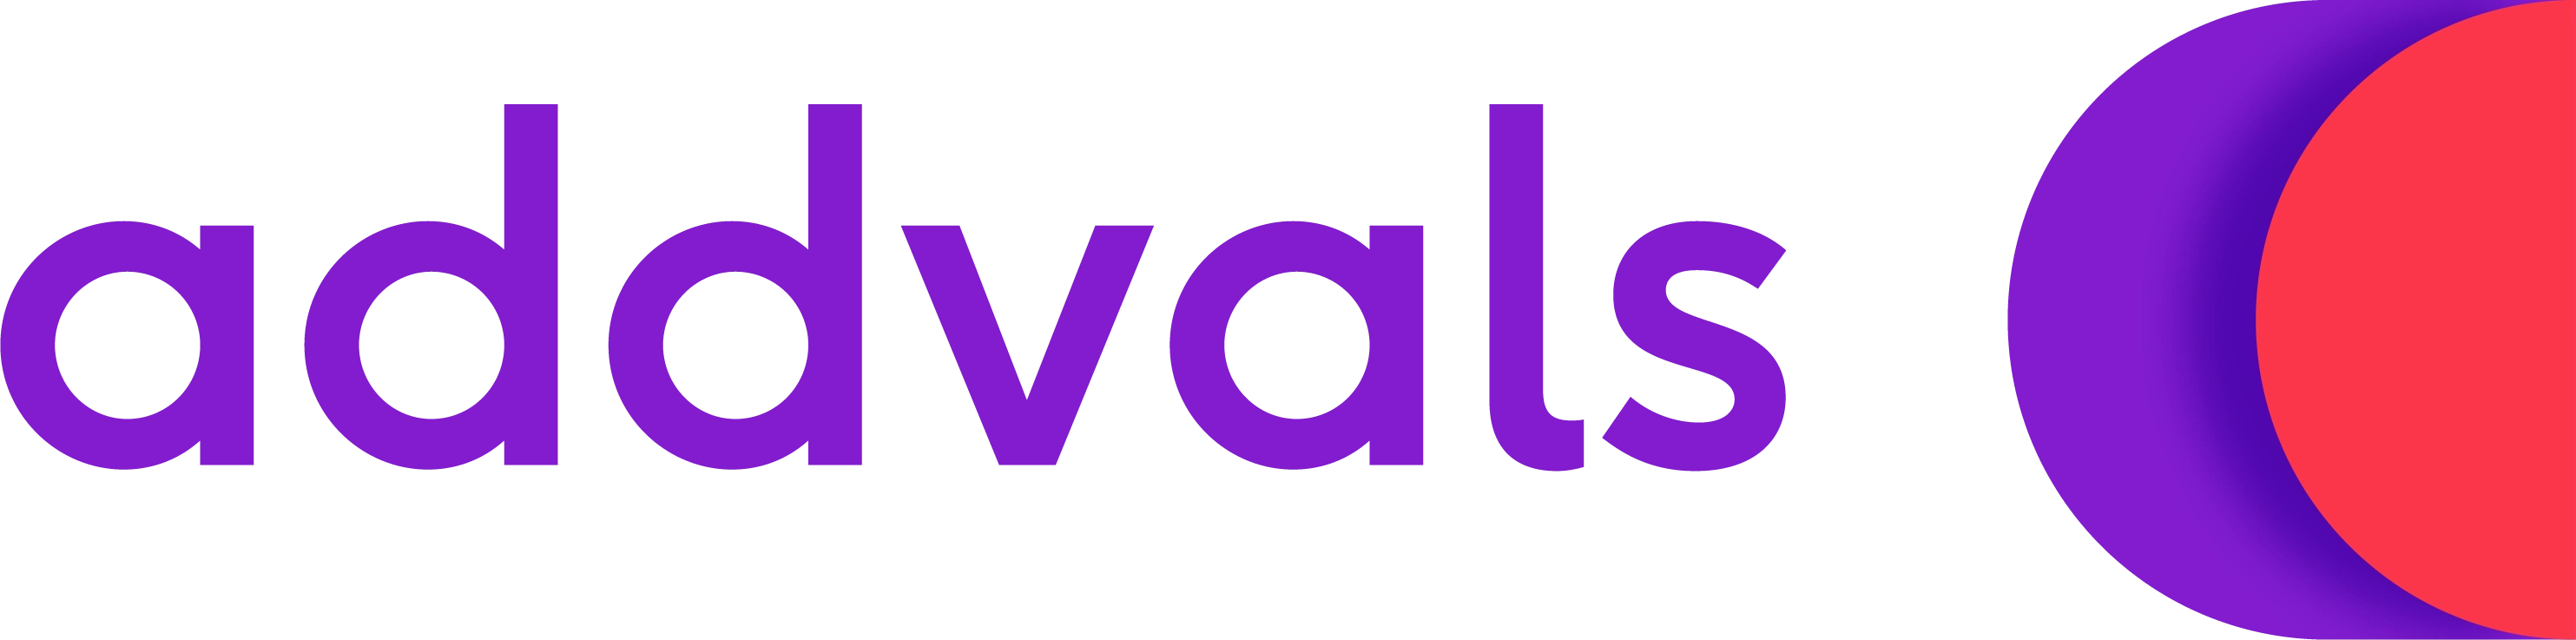 addvals logo